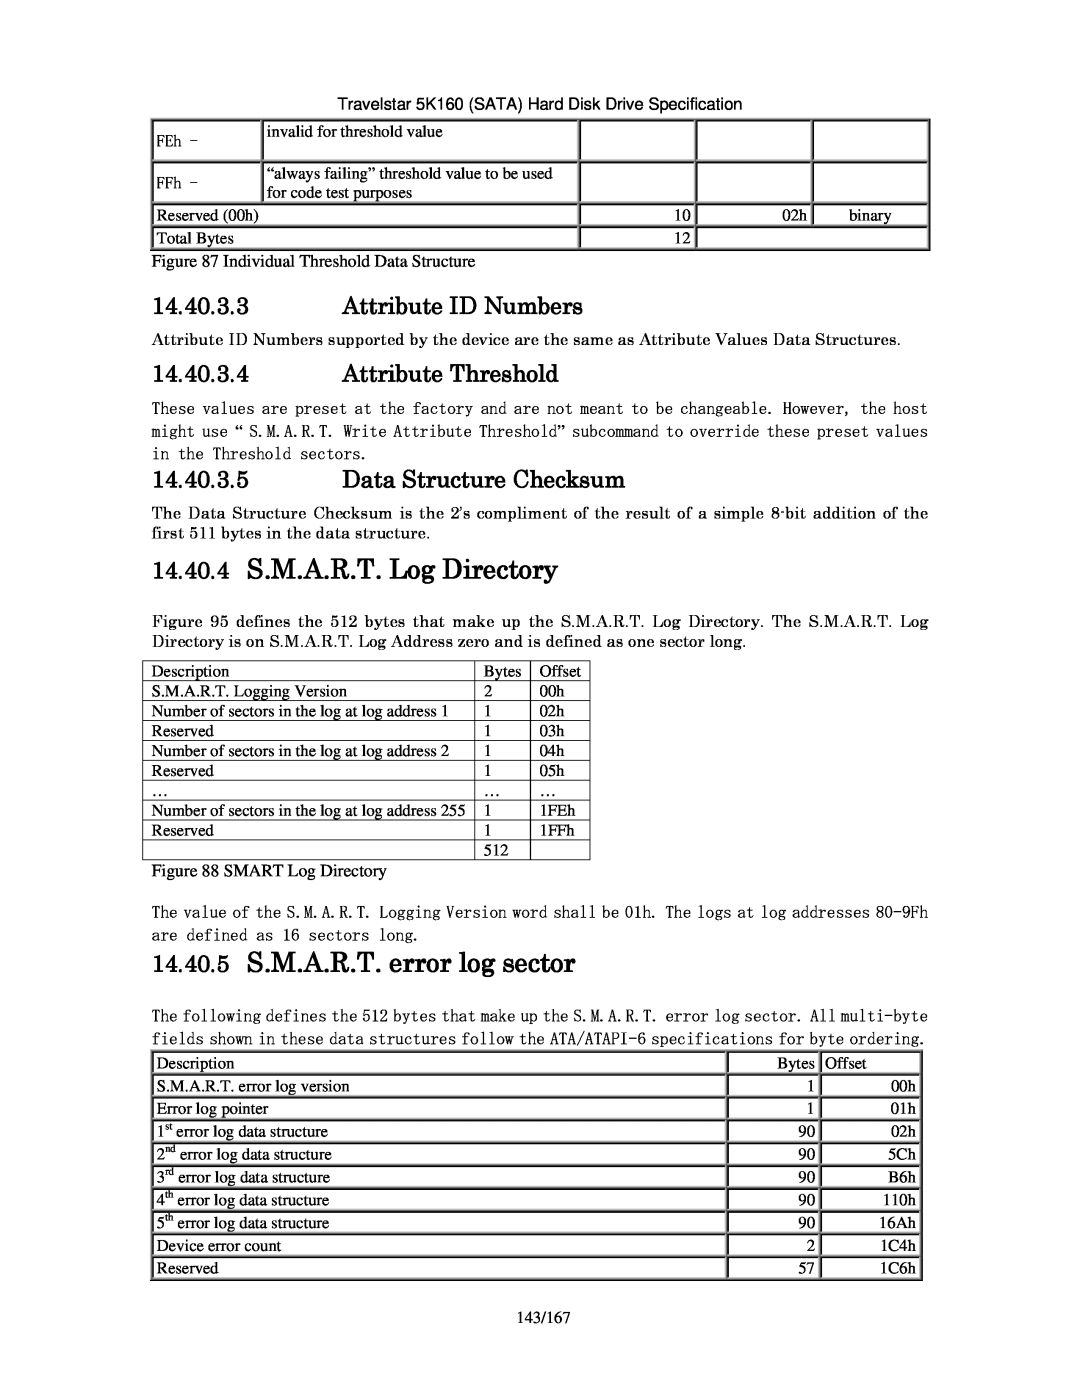 Hitachi HTS541660J9SA00 manual 14.40.4 S.M.A.R.T. Log Directory, 14.40.5 S.M.A.R.T. error log sector, Attribute ID Numbers 